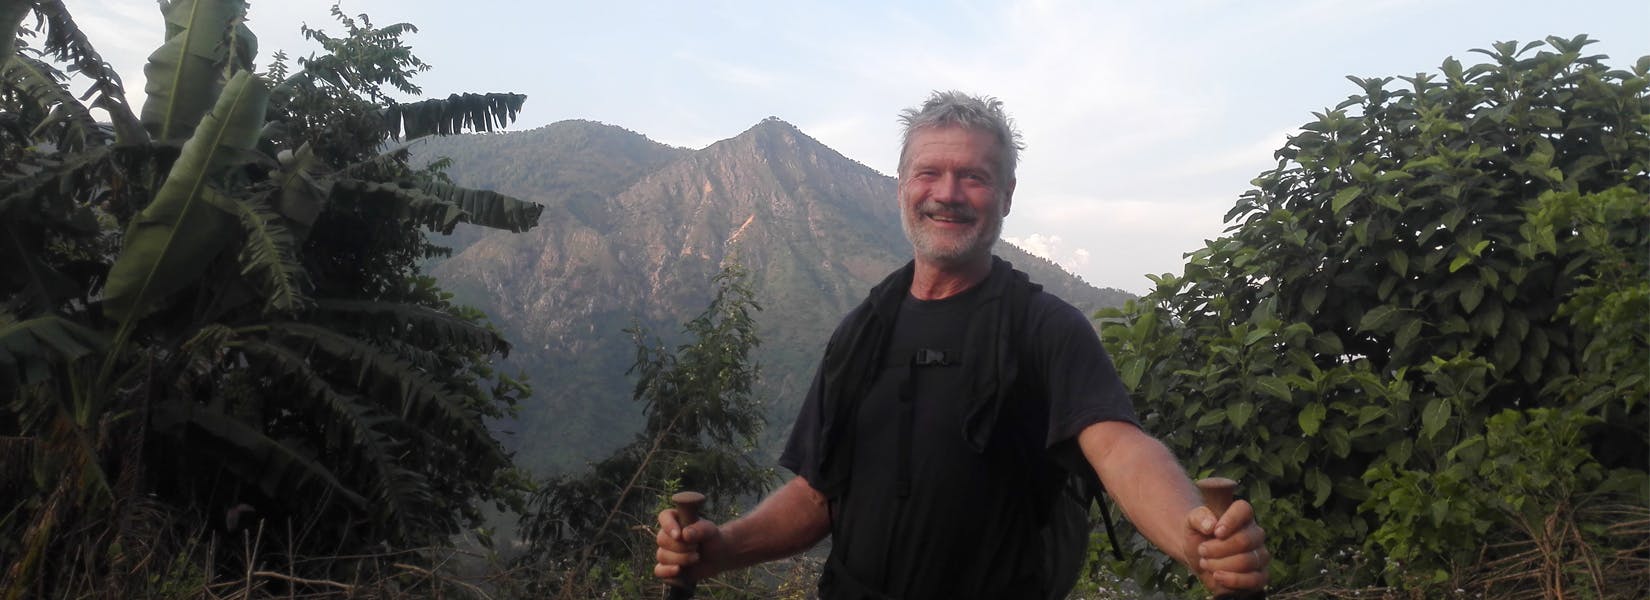 Camino Trail in Nepal: Hike, Charity, Storytelling, Pilgrimage